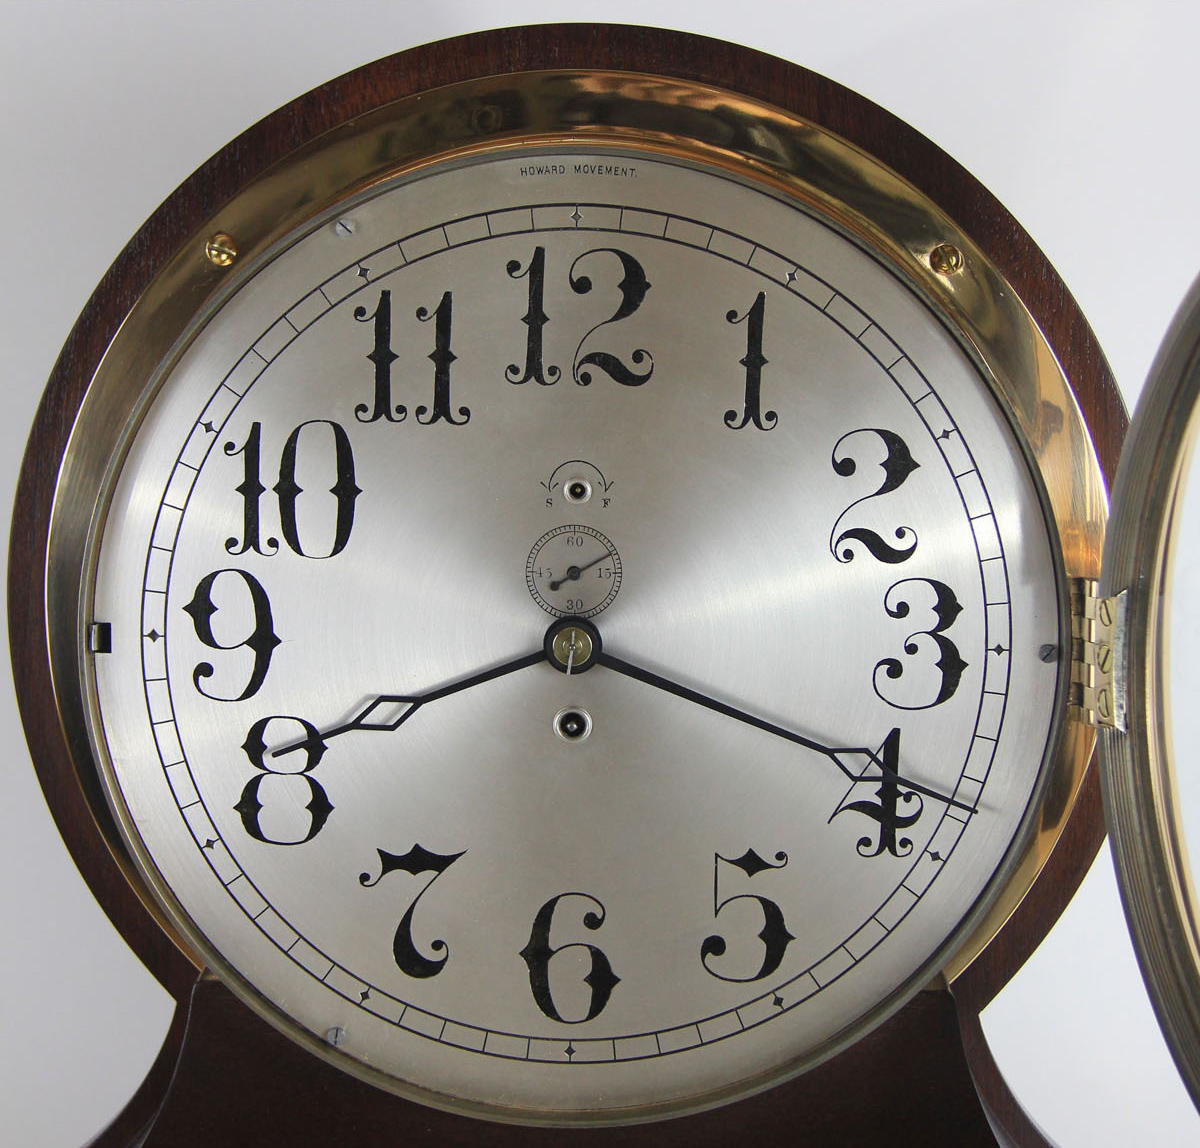 E. Howard 12 inch Marine Clock with Unusual Arabic Numerals